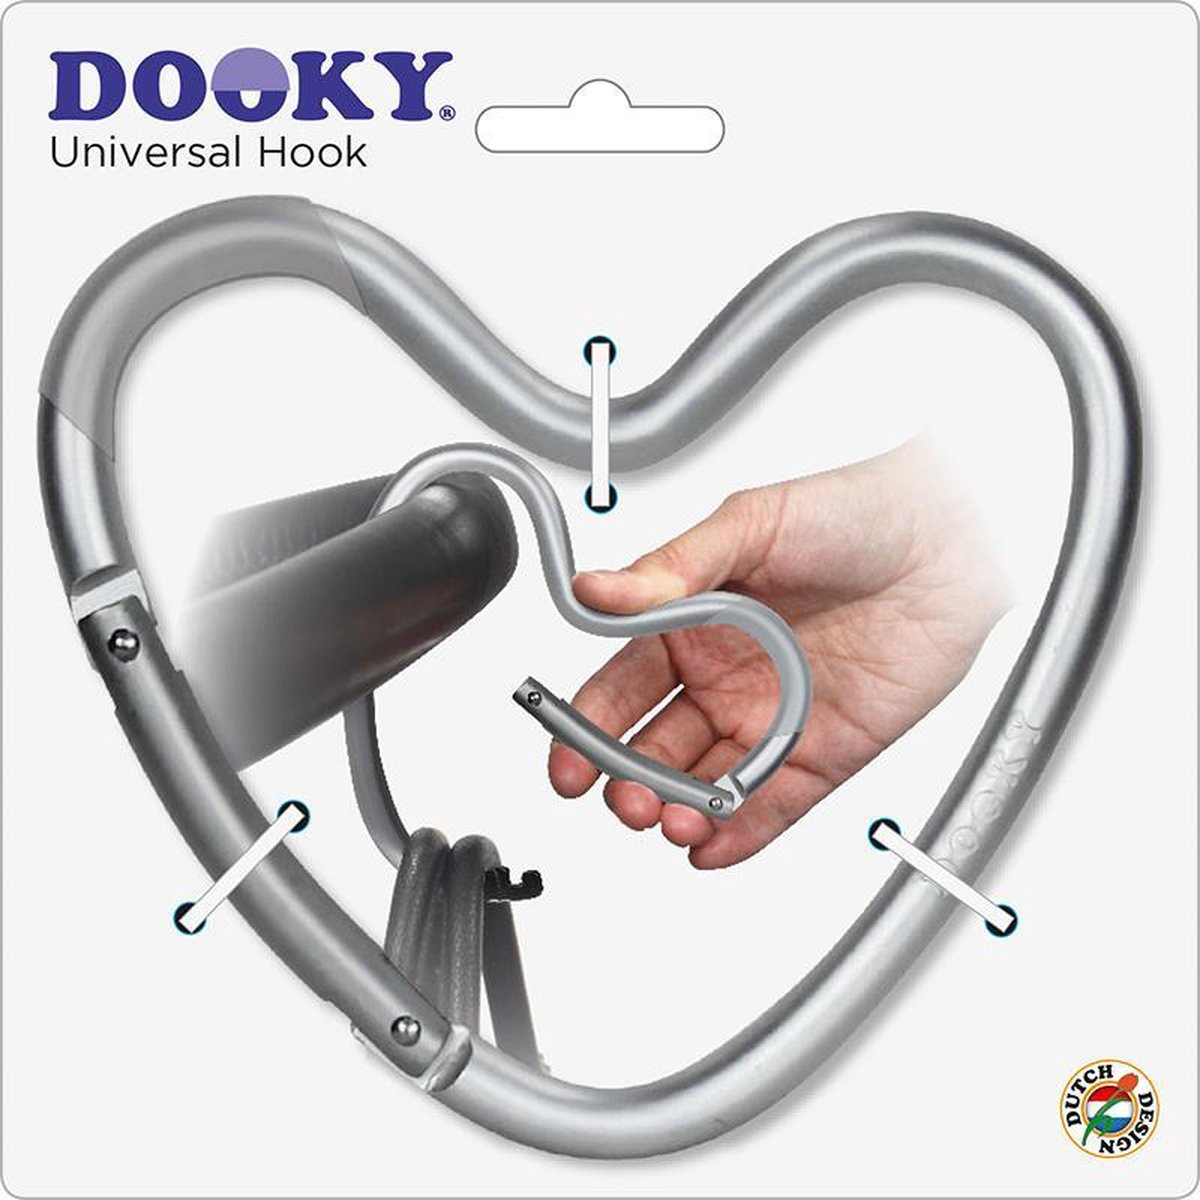 Dooky Universal Hook Tassenhaak Hartvorm Silver (mat) - Dooky